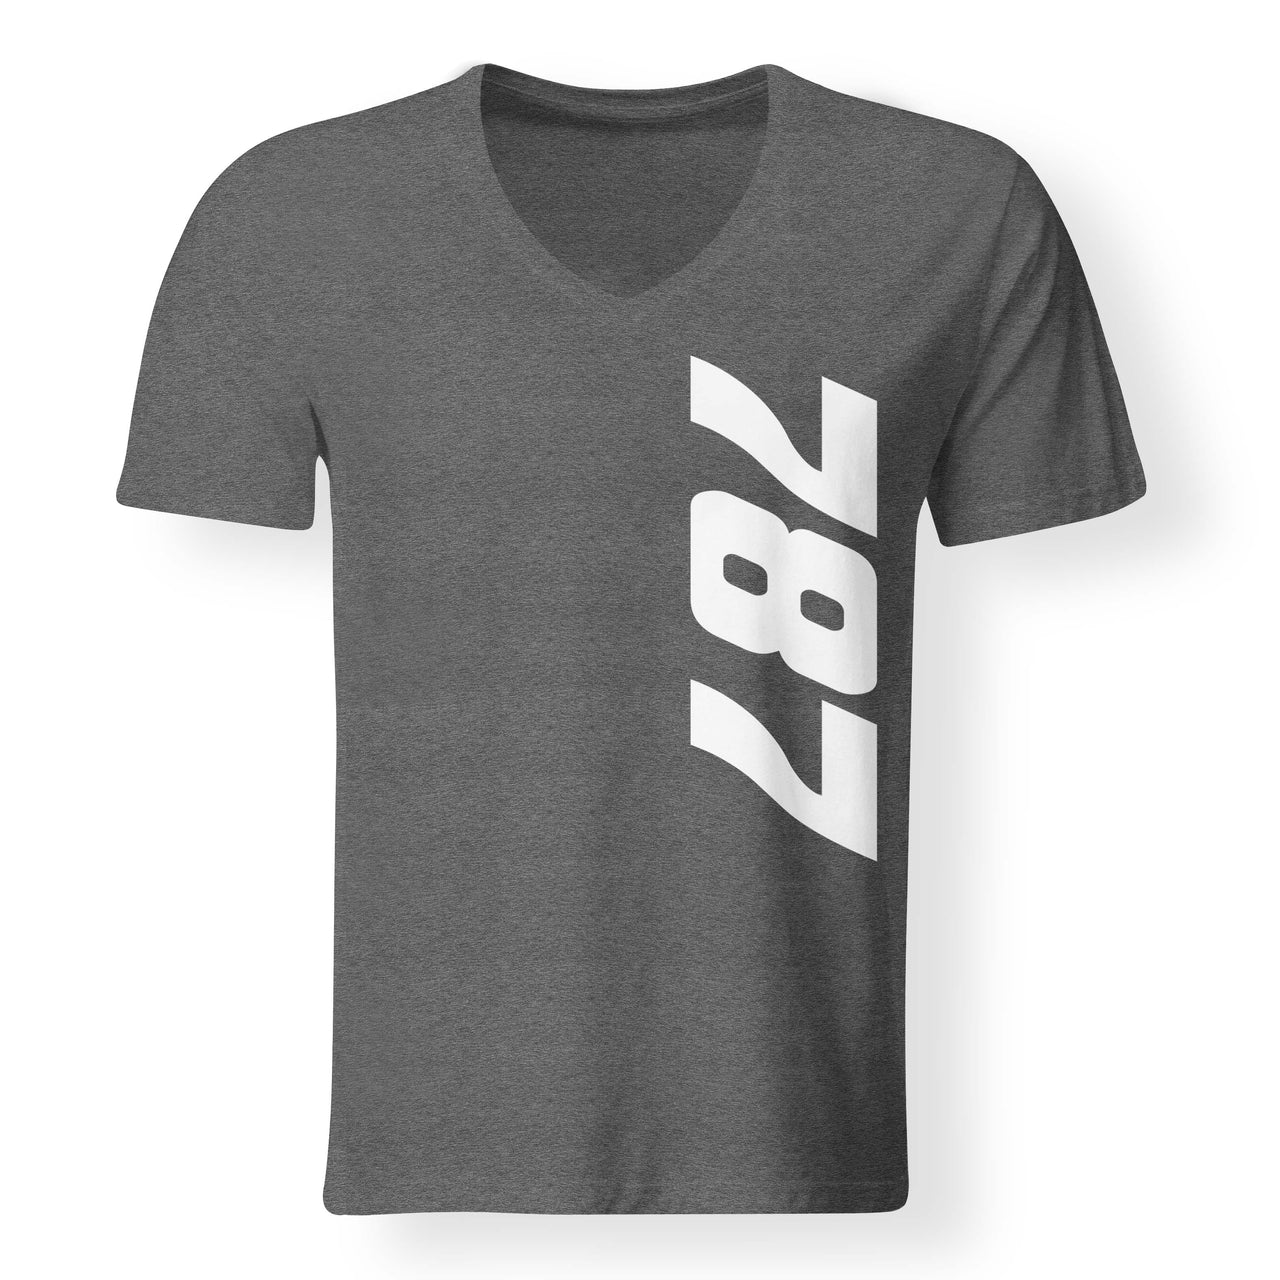 Boeing 787 Text Designed V-Neck T-Shirts